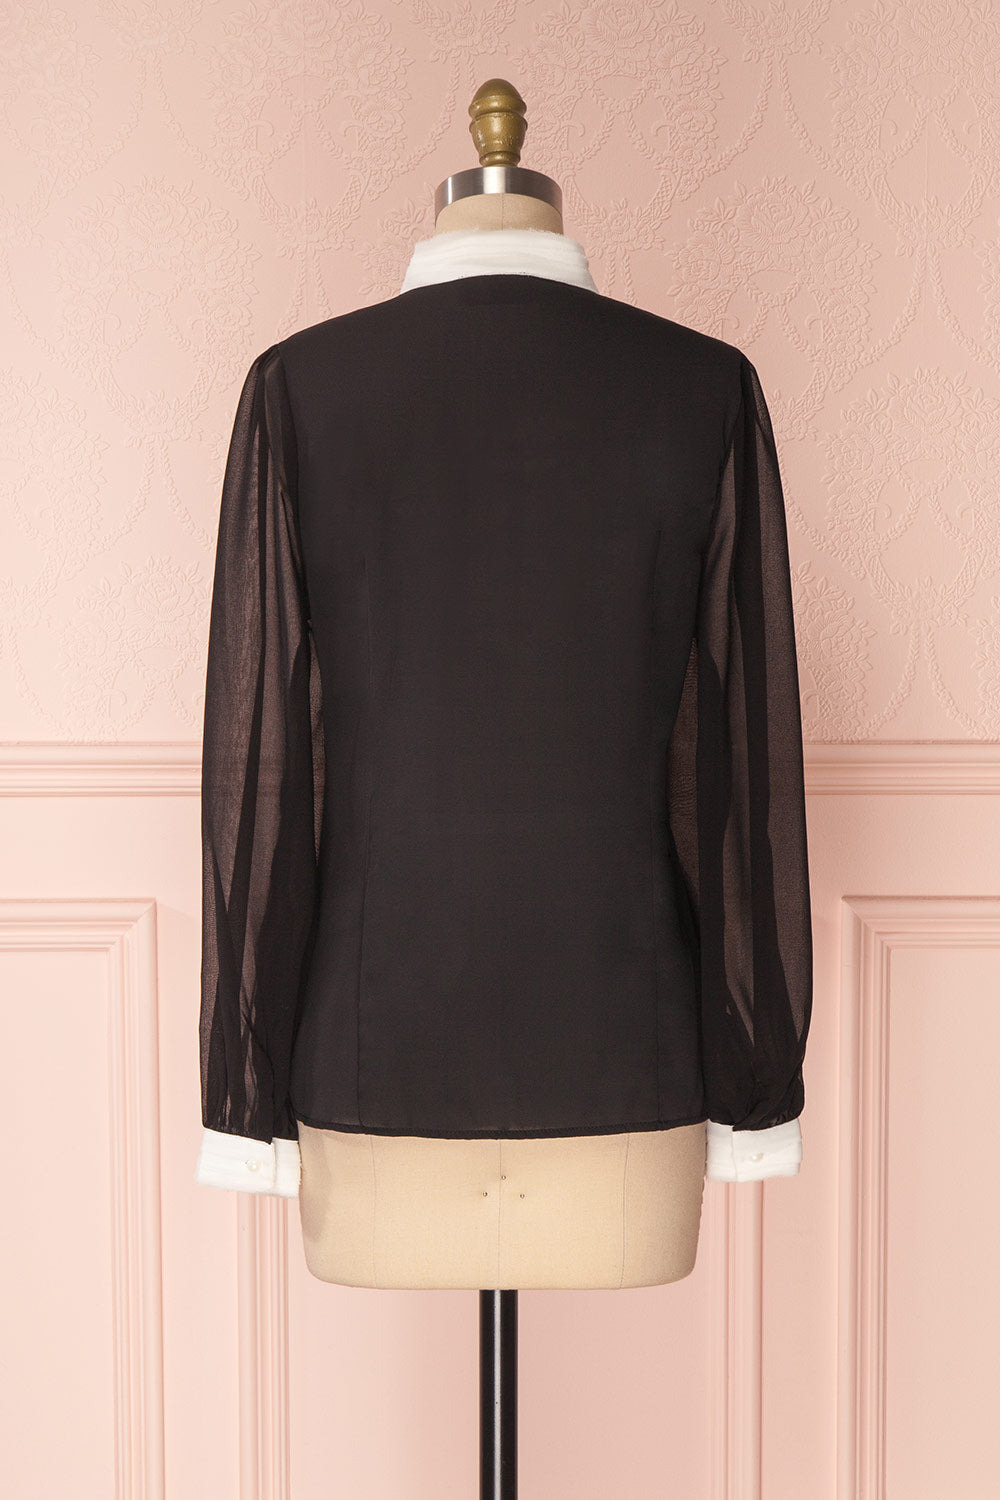 Kathryn Black & White Lace Ruffled Chiffon Blouse | Boutique 1861 11